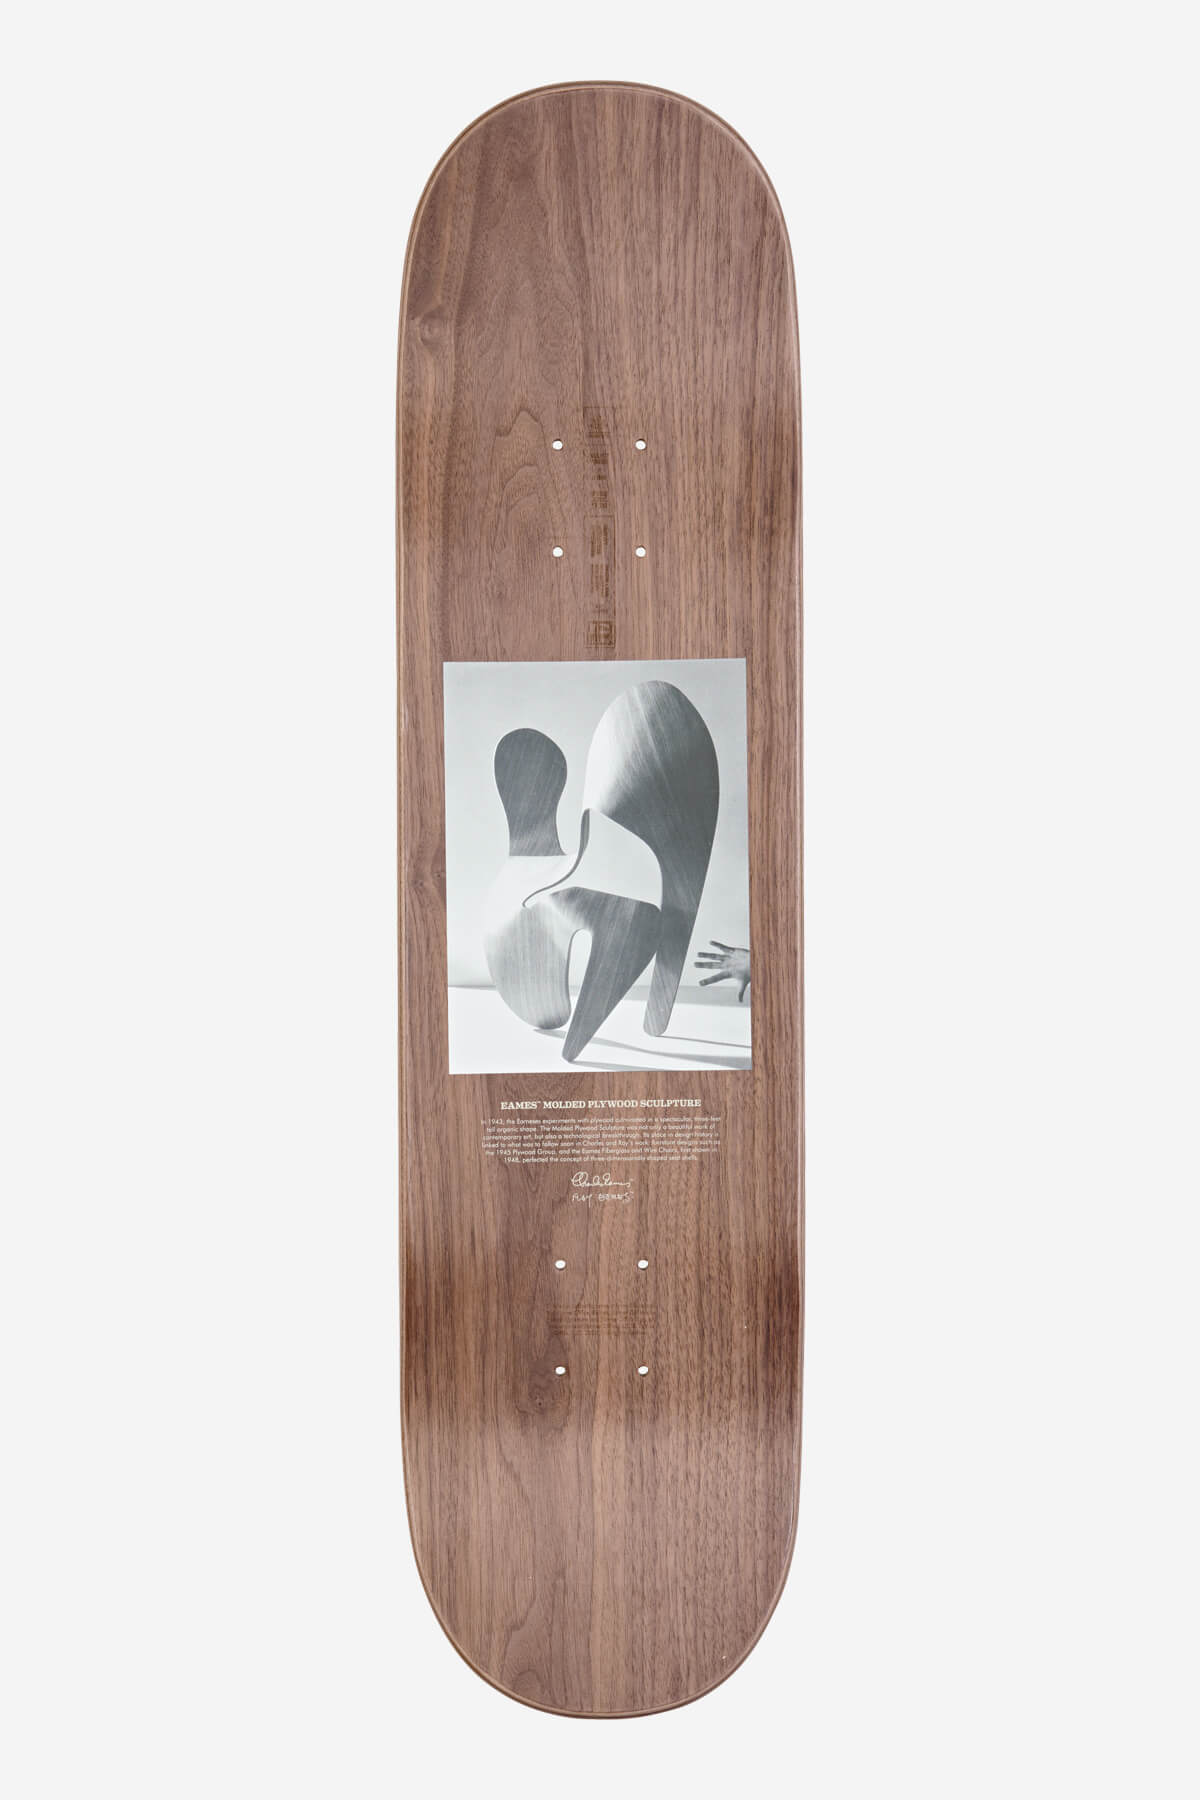 Globe - Silhouette Eames - Plywood Sculpture - 8,0". Skateboard Deck